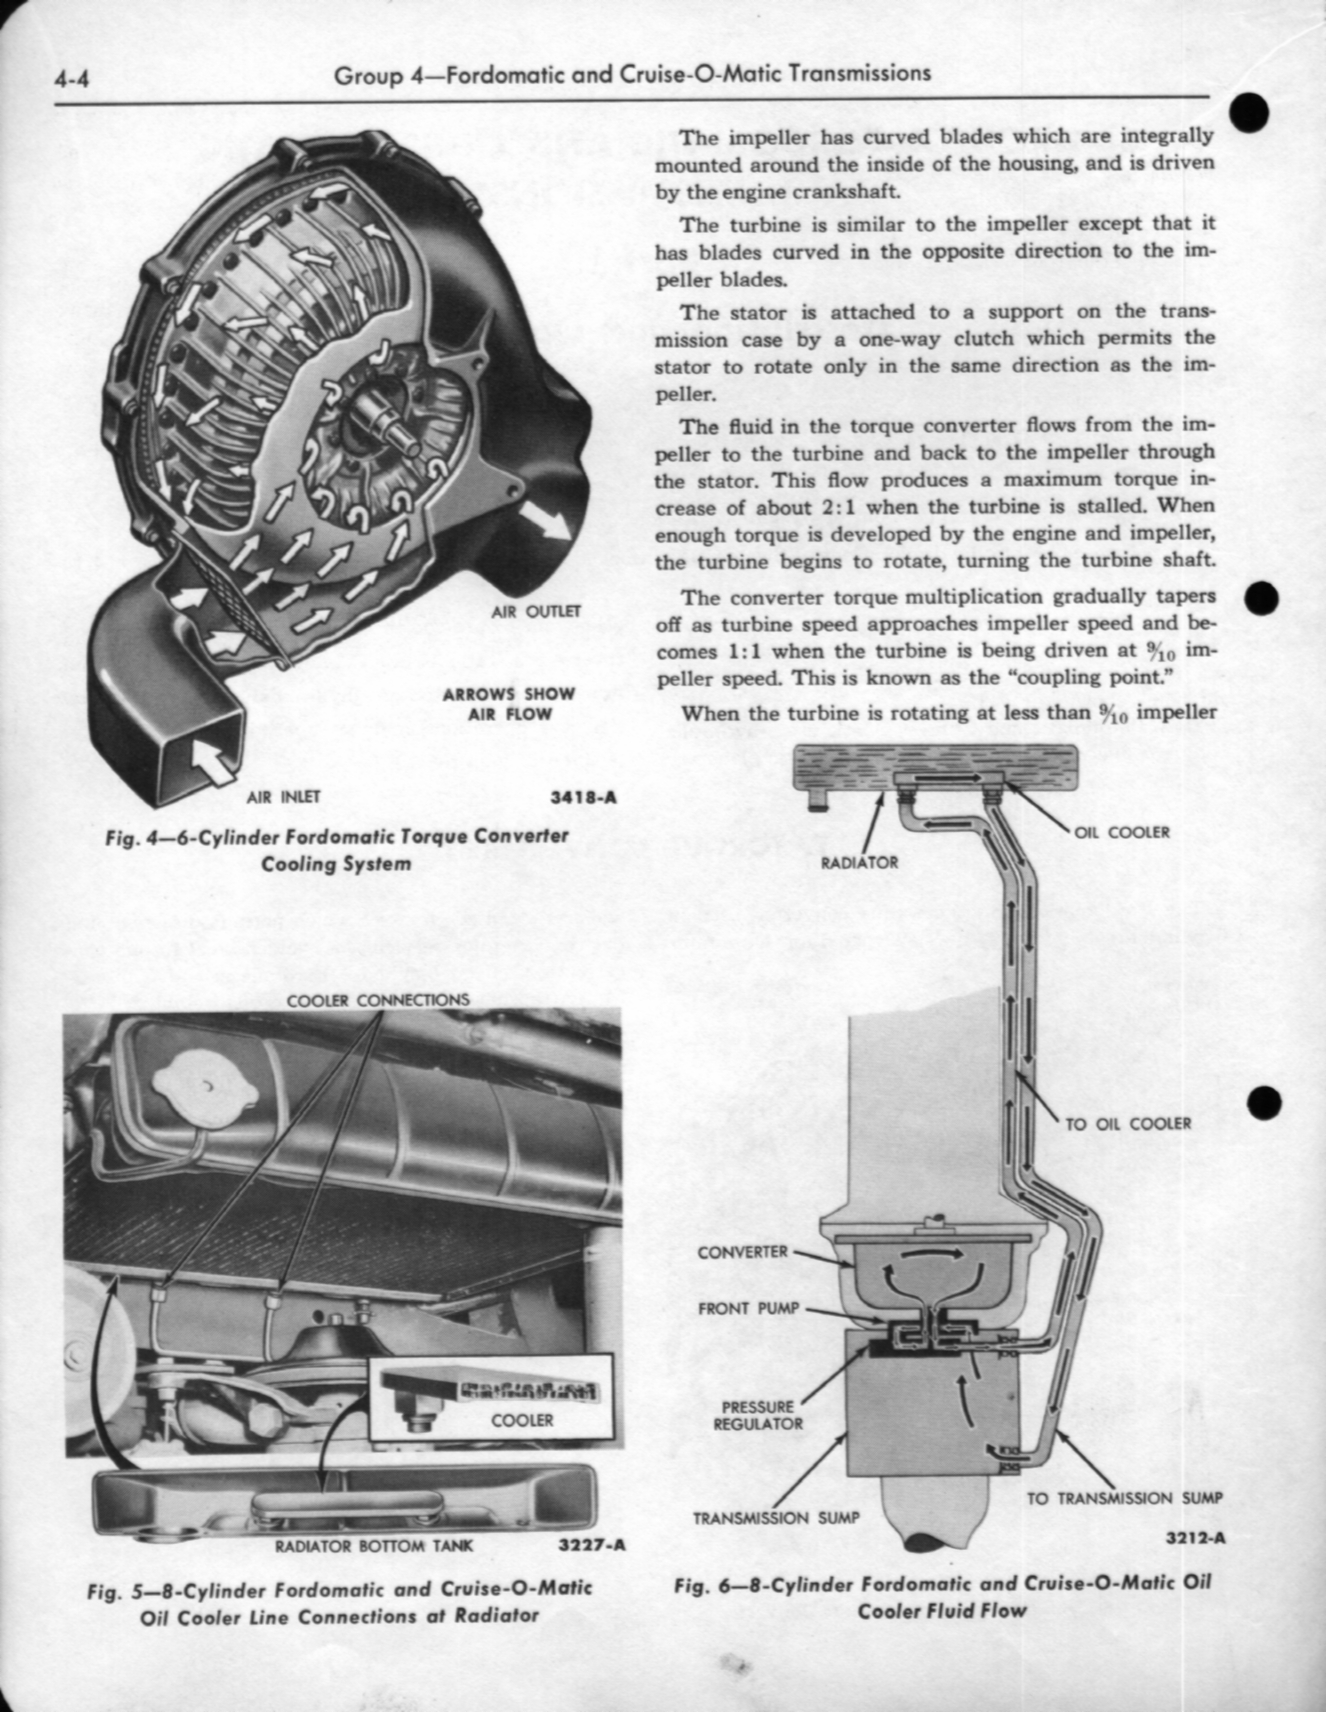 1958 Ford cruise-o-matic transmission